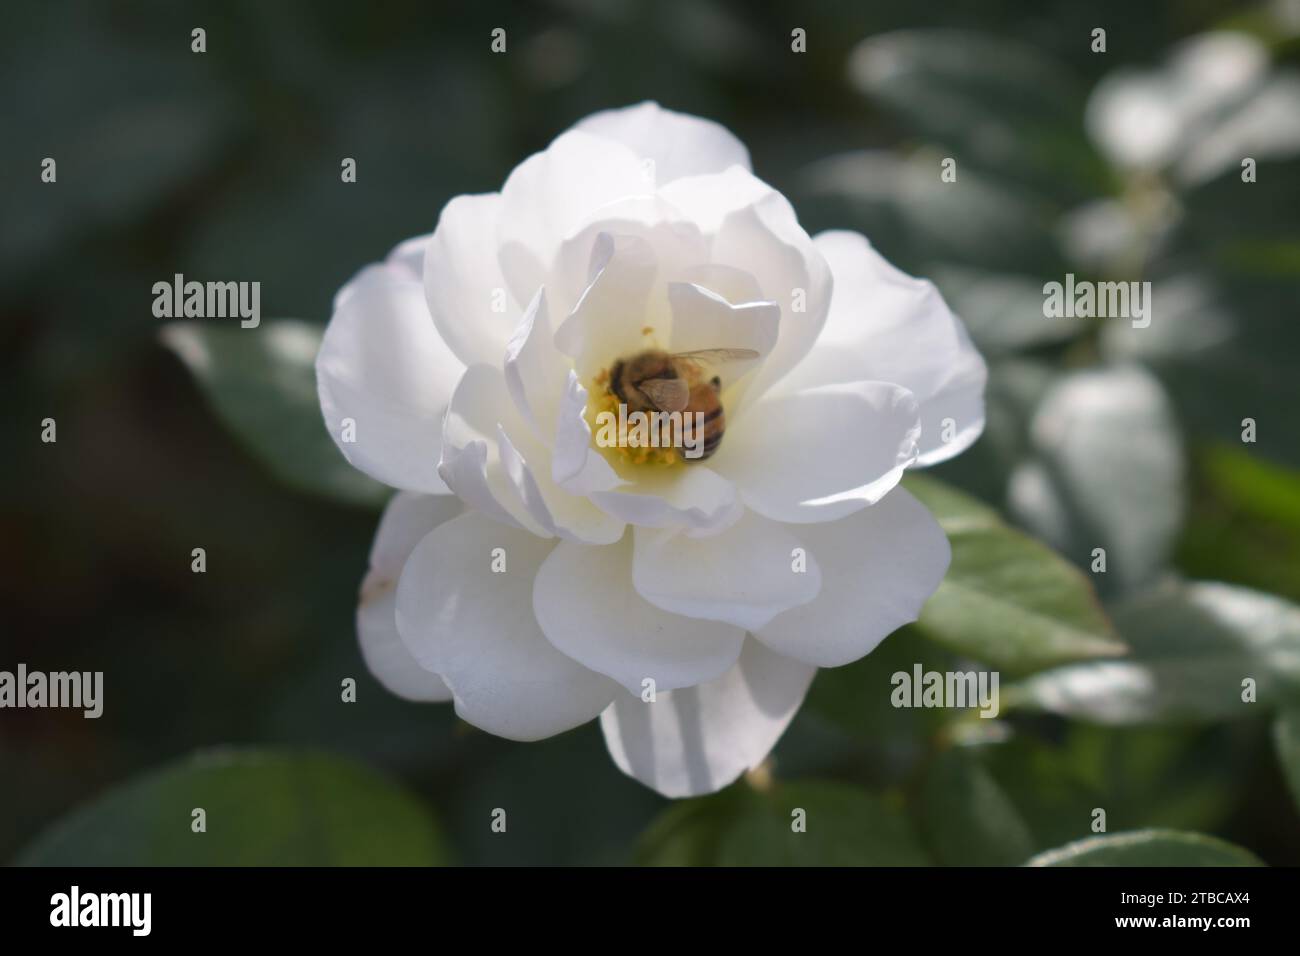 Honey bee on white rose Stock Photo